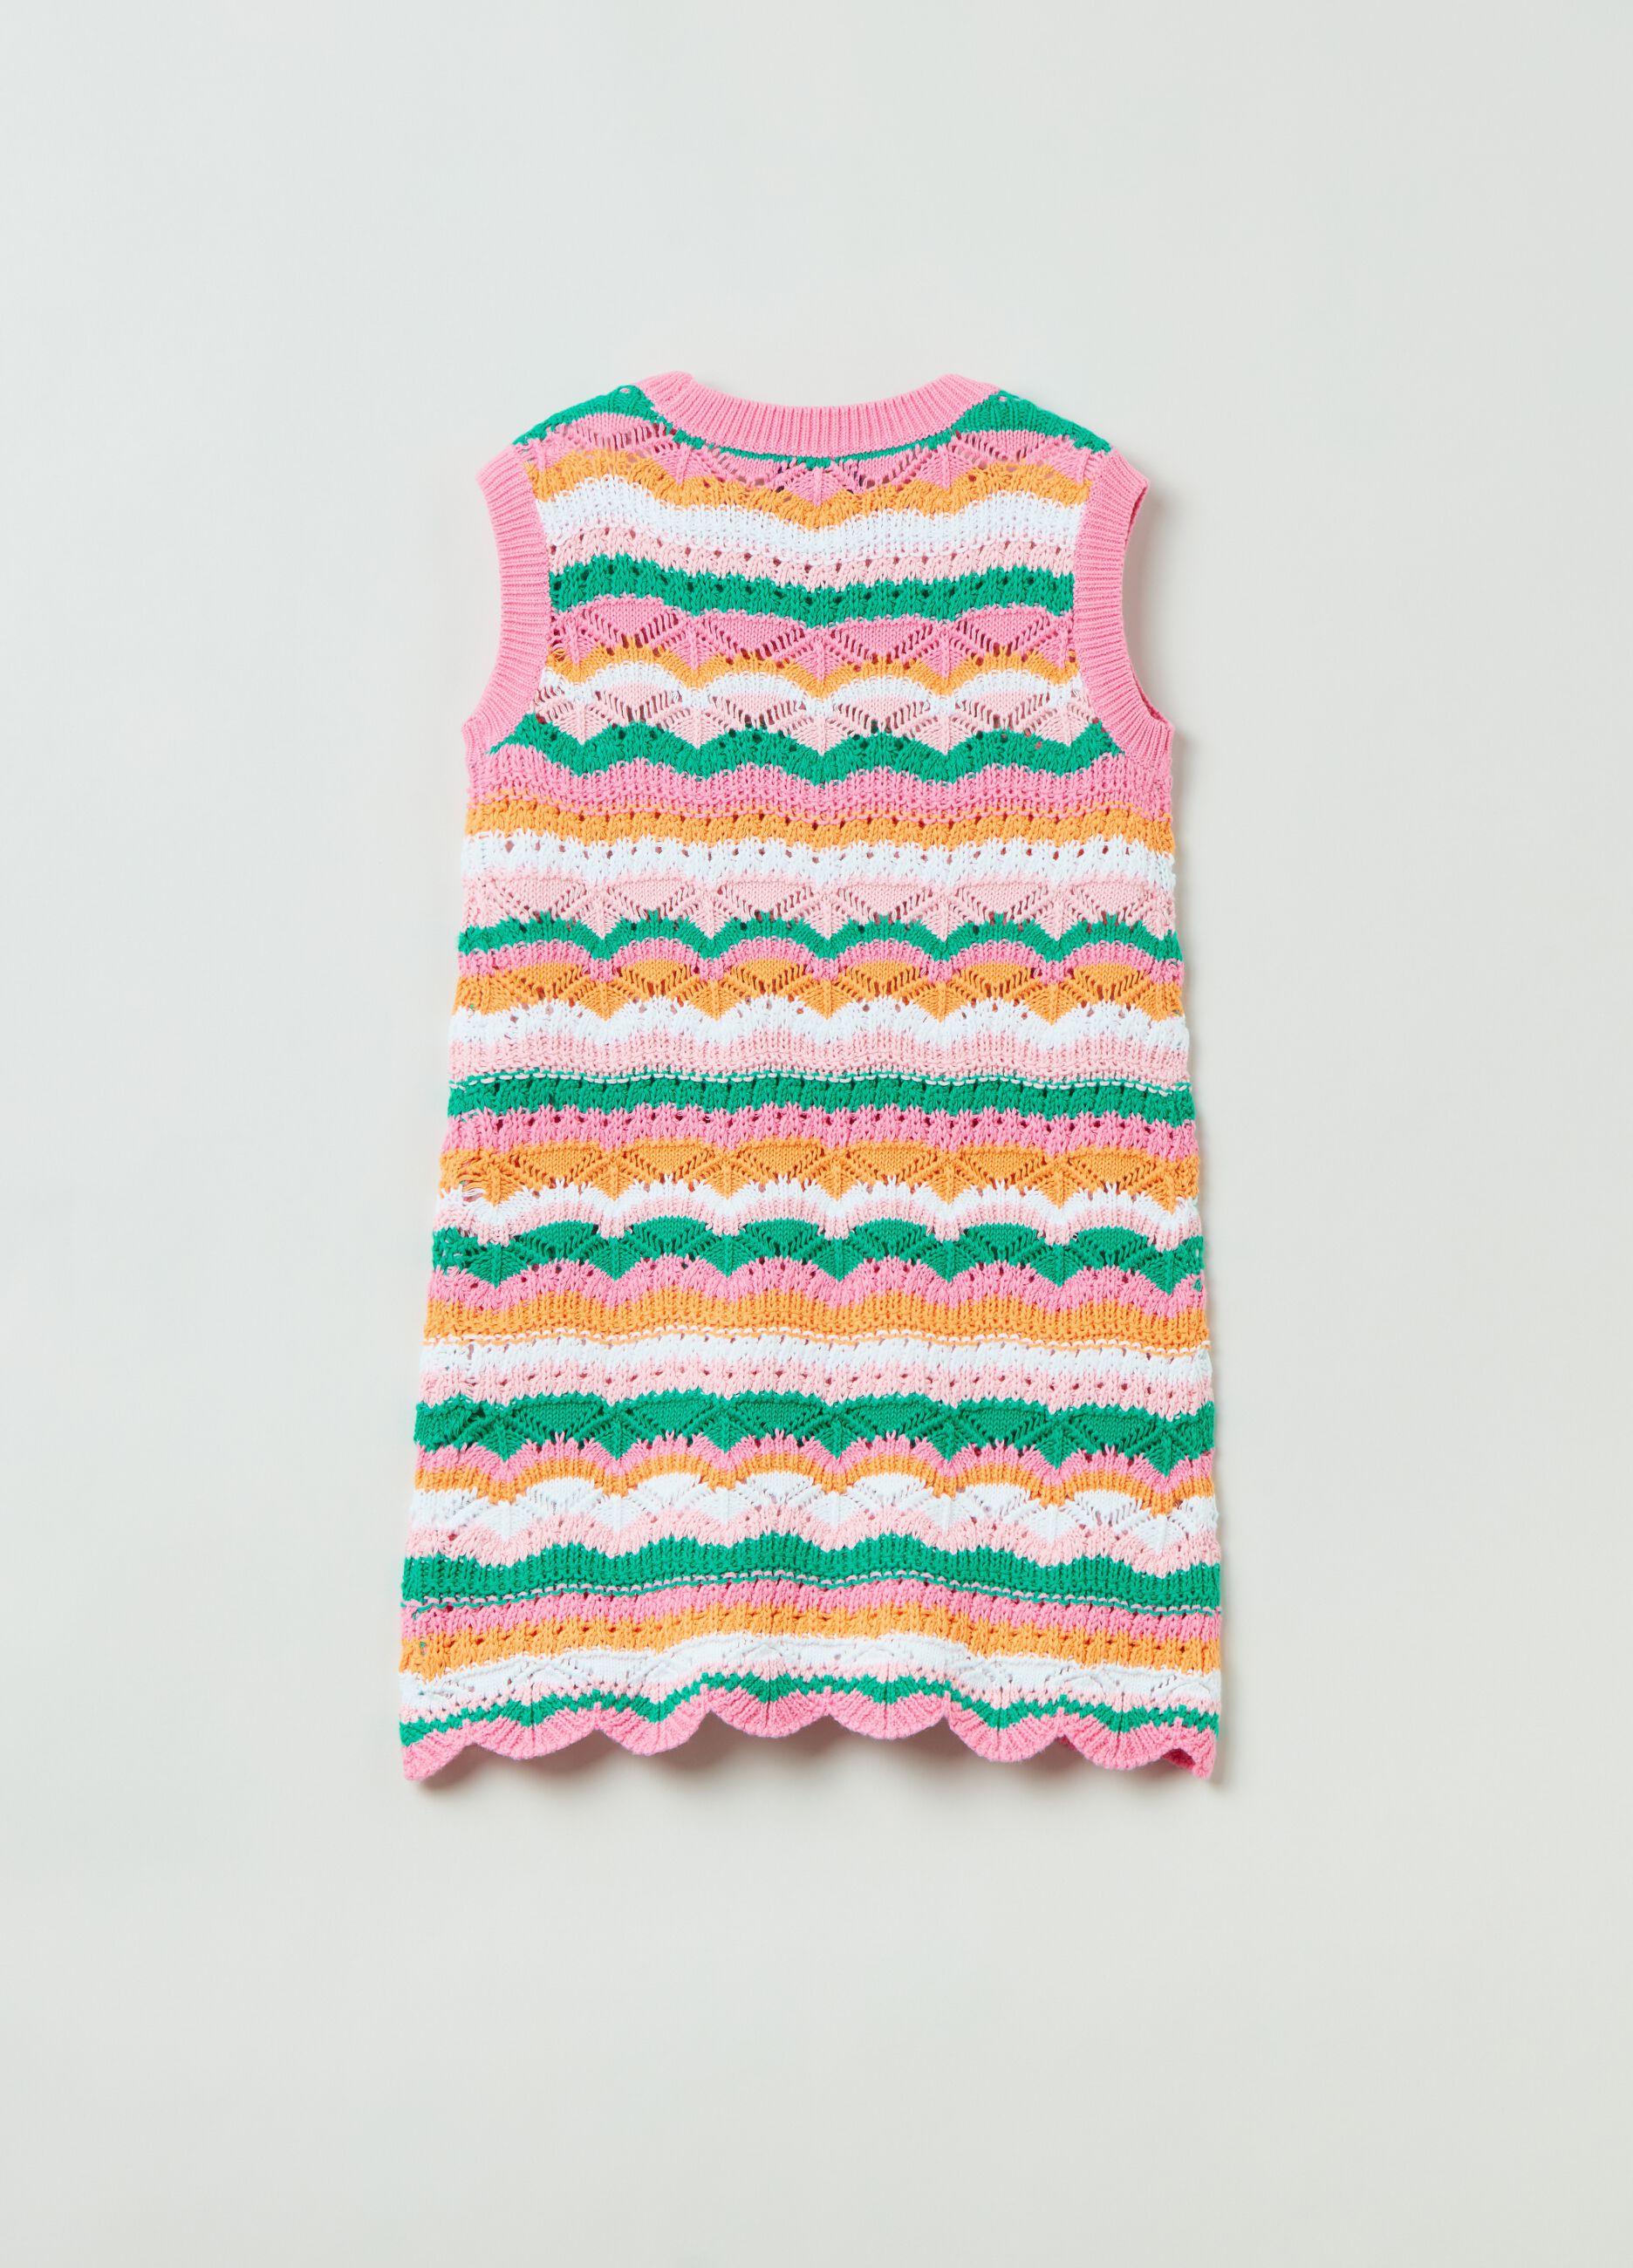 Sleeveless dress in crochet cotton